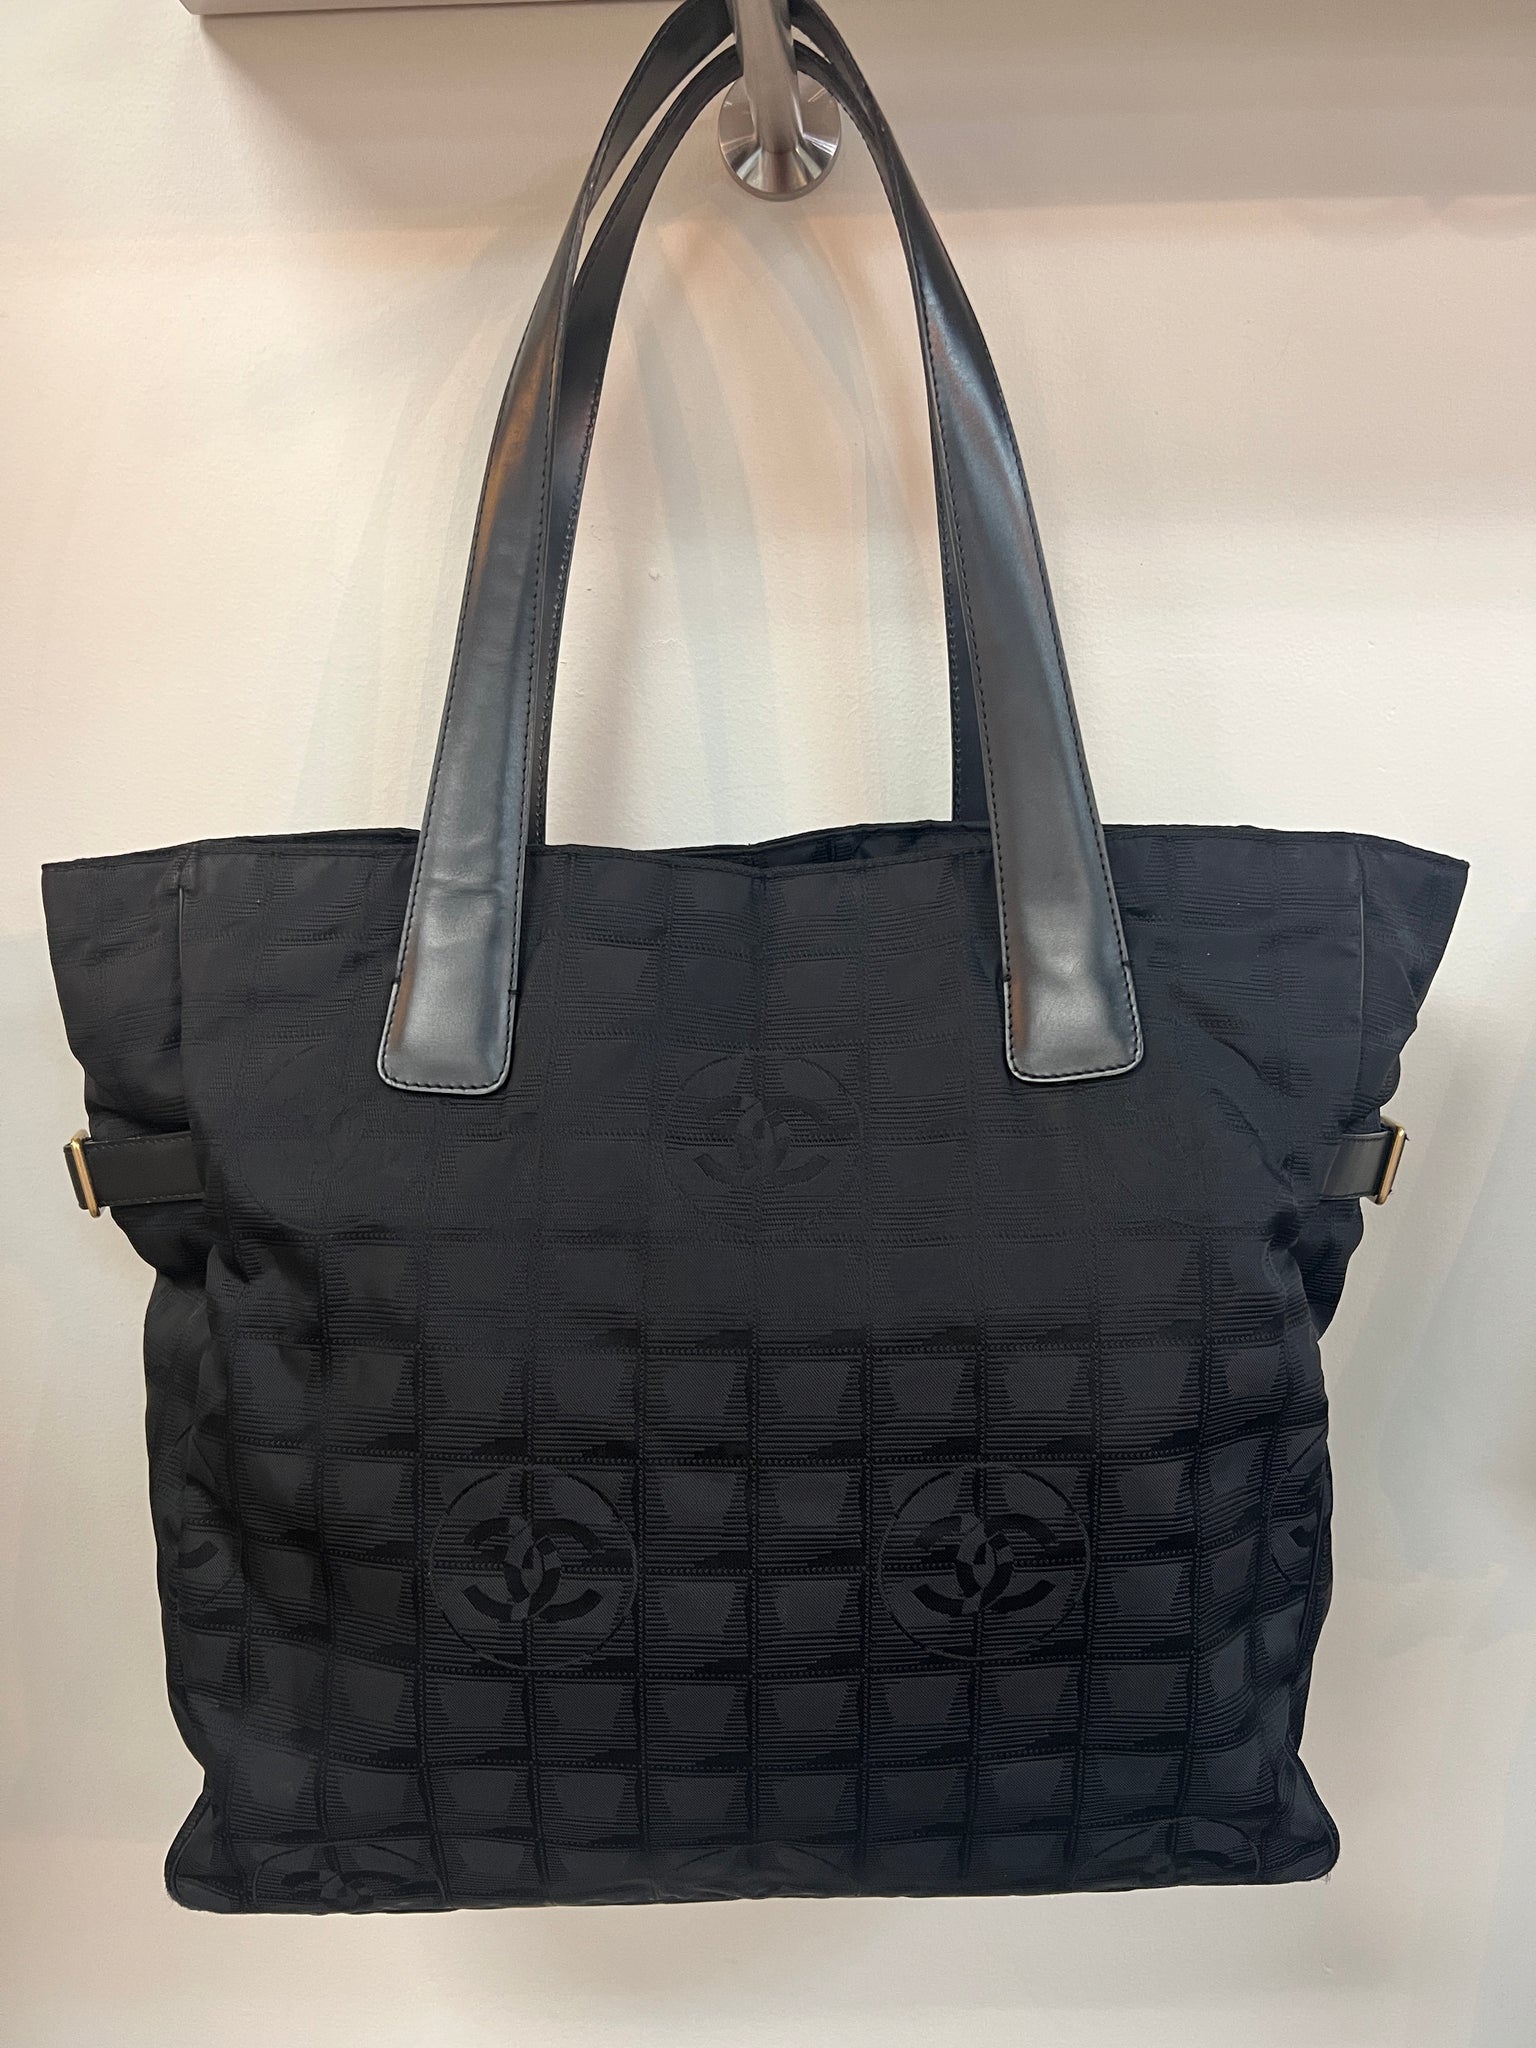 genuine leather chanel bag black